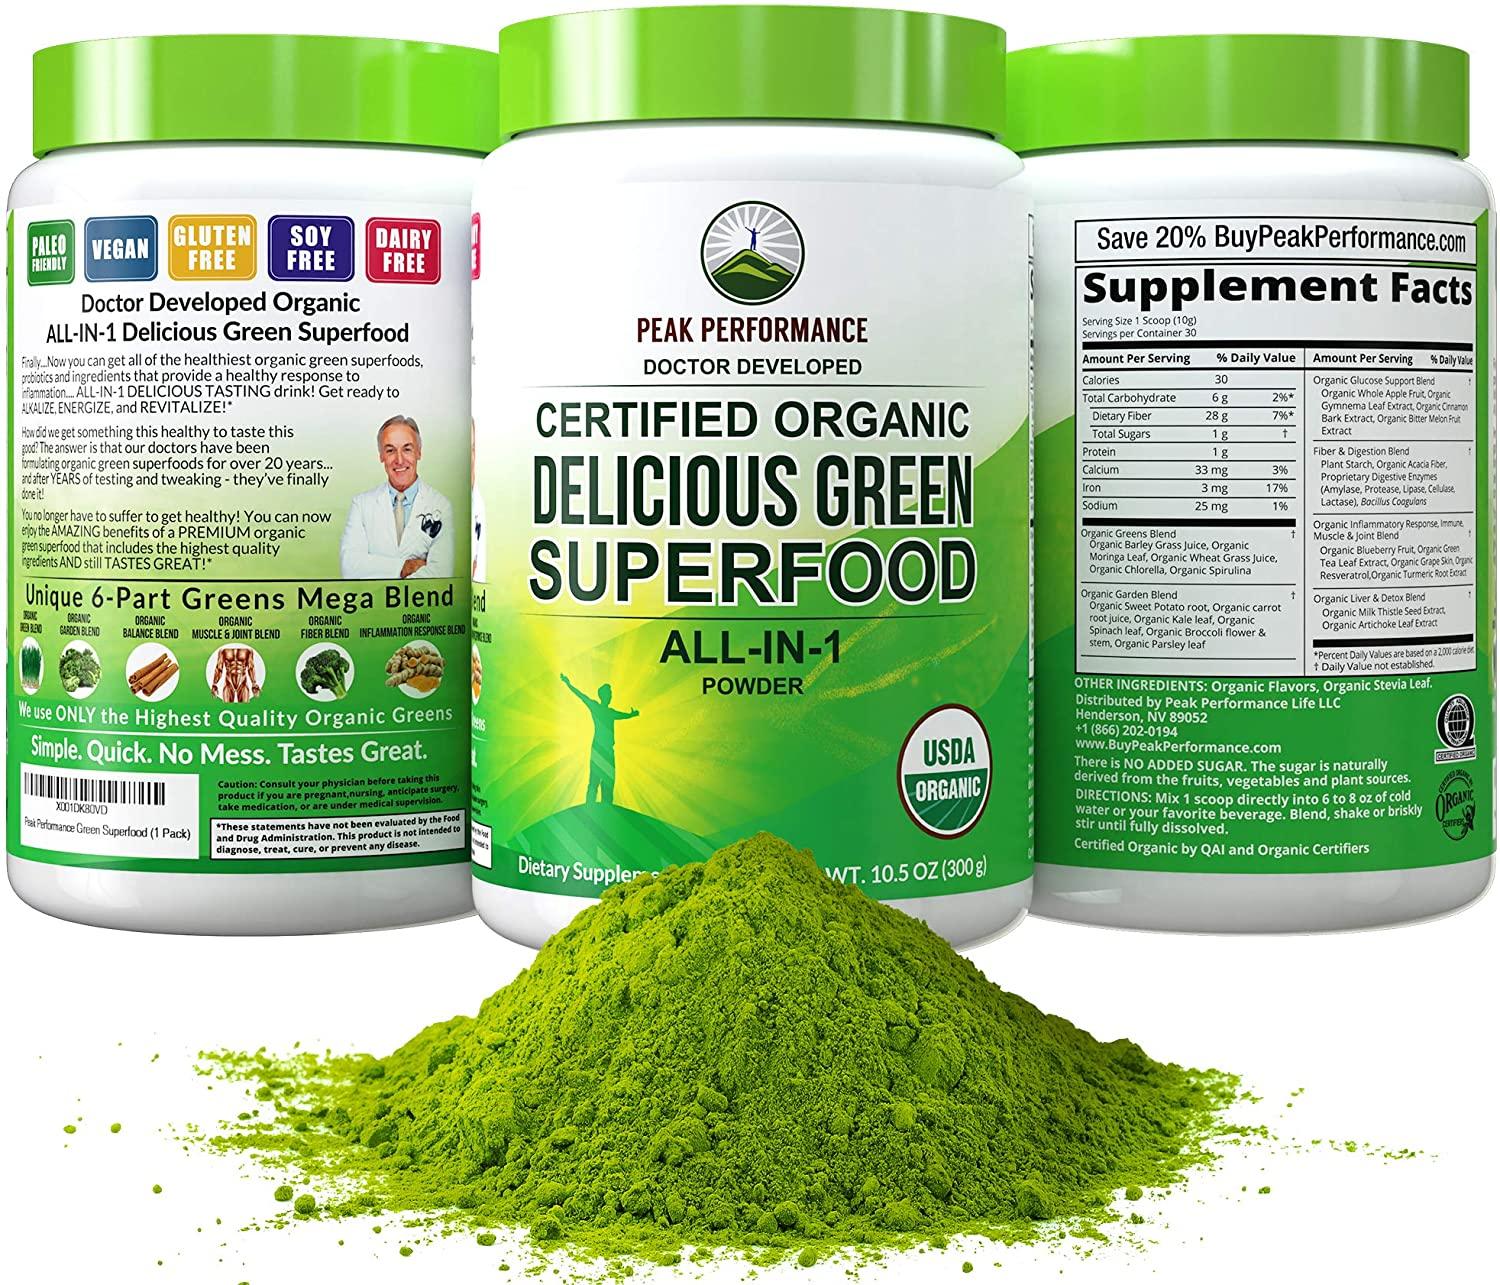 Peak Performance Organic Greens Superfood Powder for $27.55 Shipped